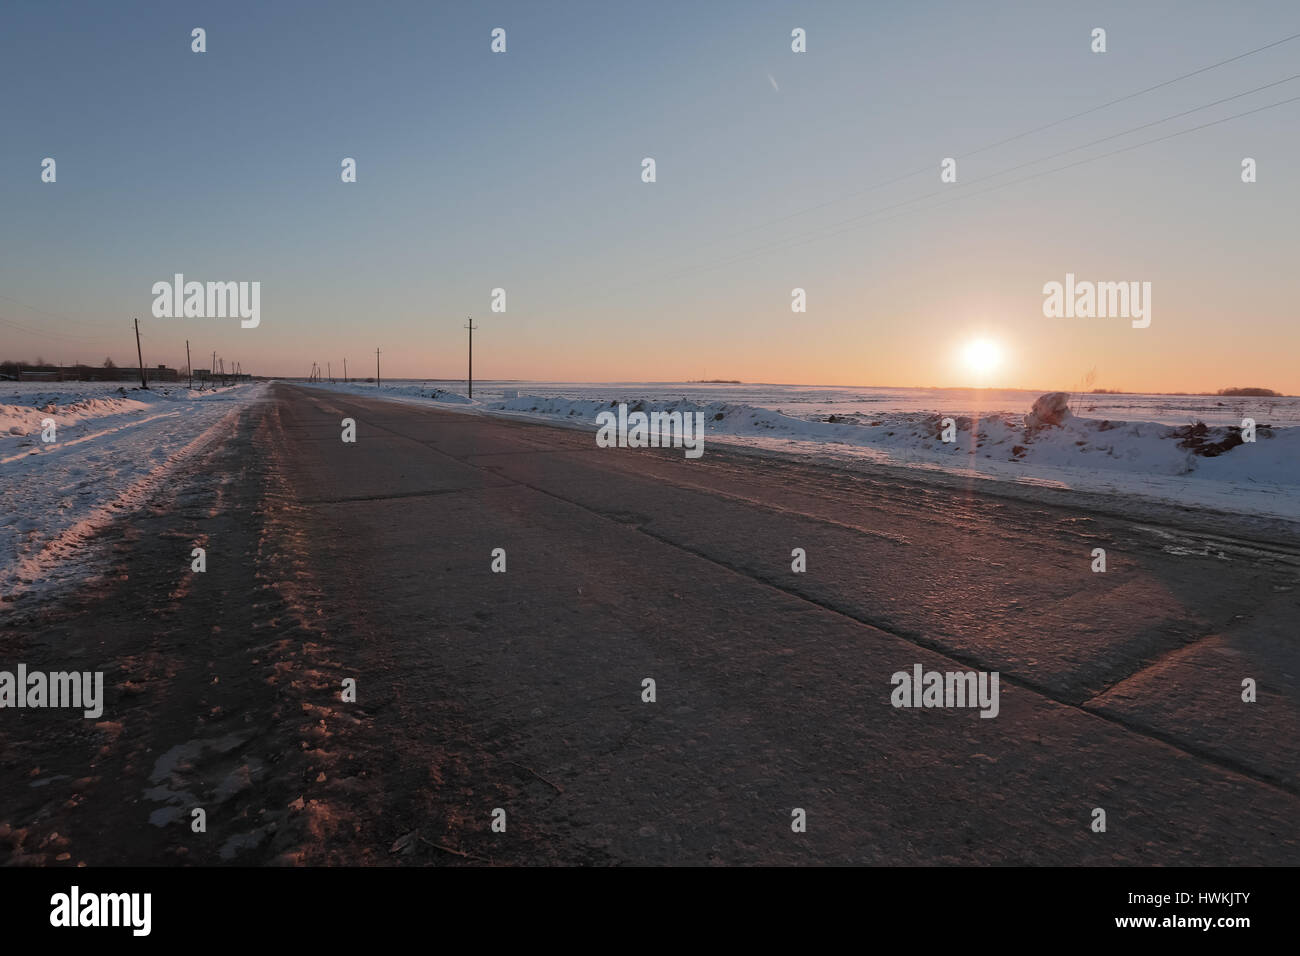 Russian road in the winter season. Stock Photo